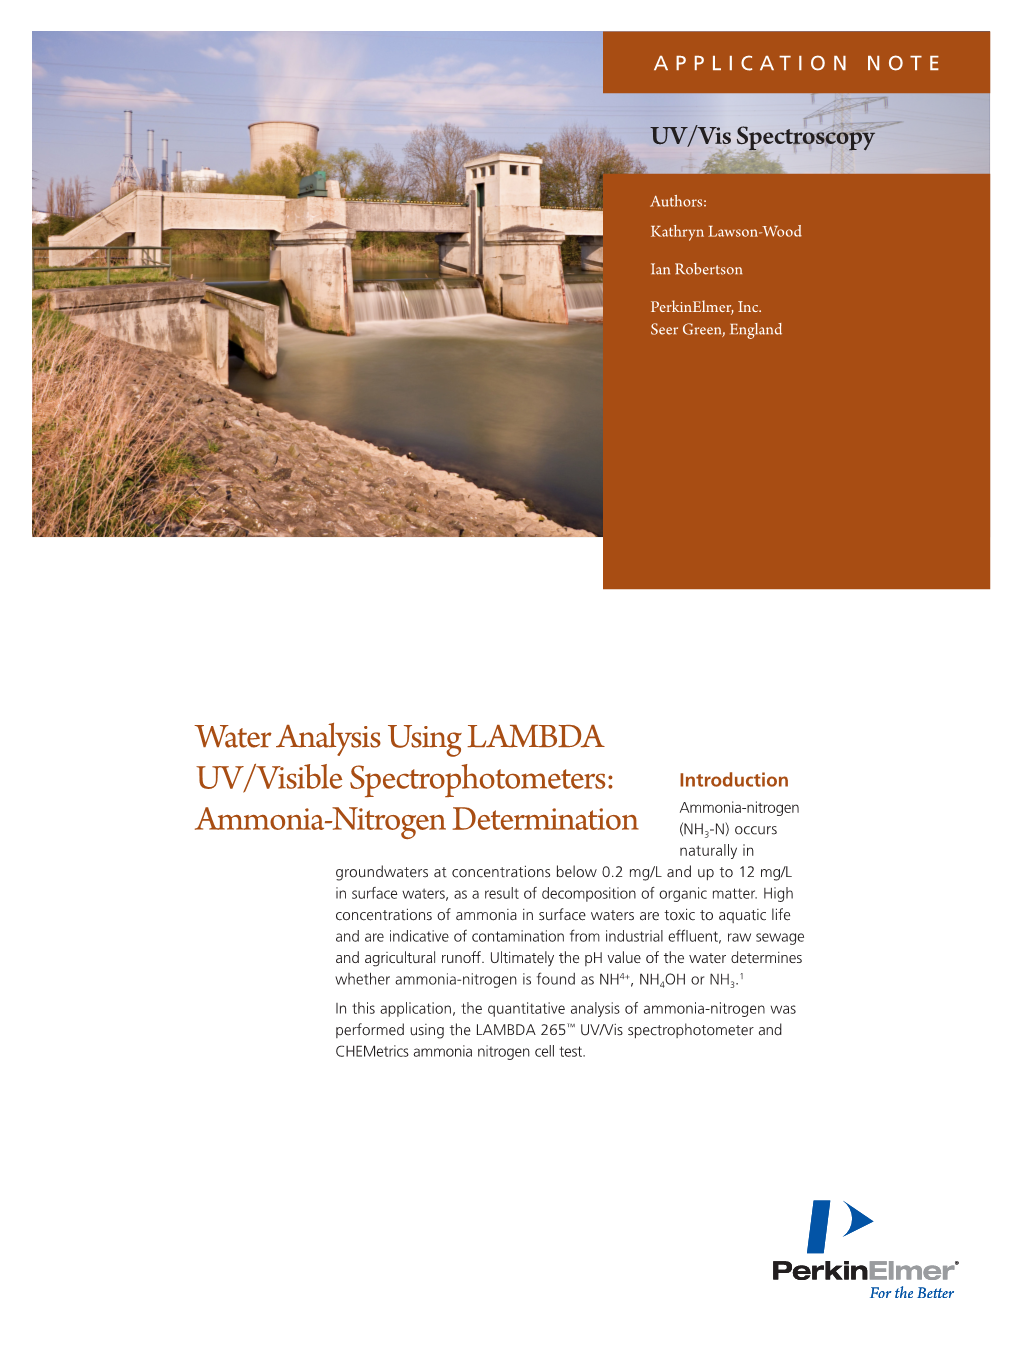 Water Analysis Using LAMBDA UV/Visible Spectrophotometers: Introduction Ammonia-Nitrogen